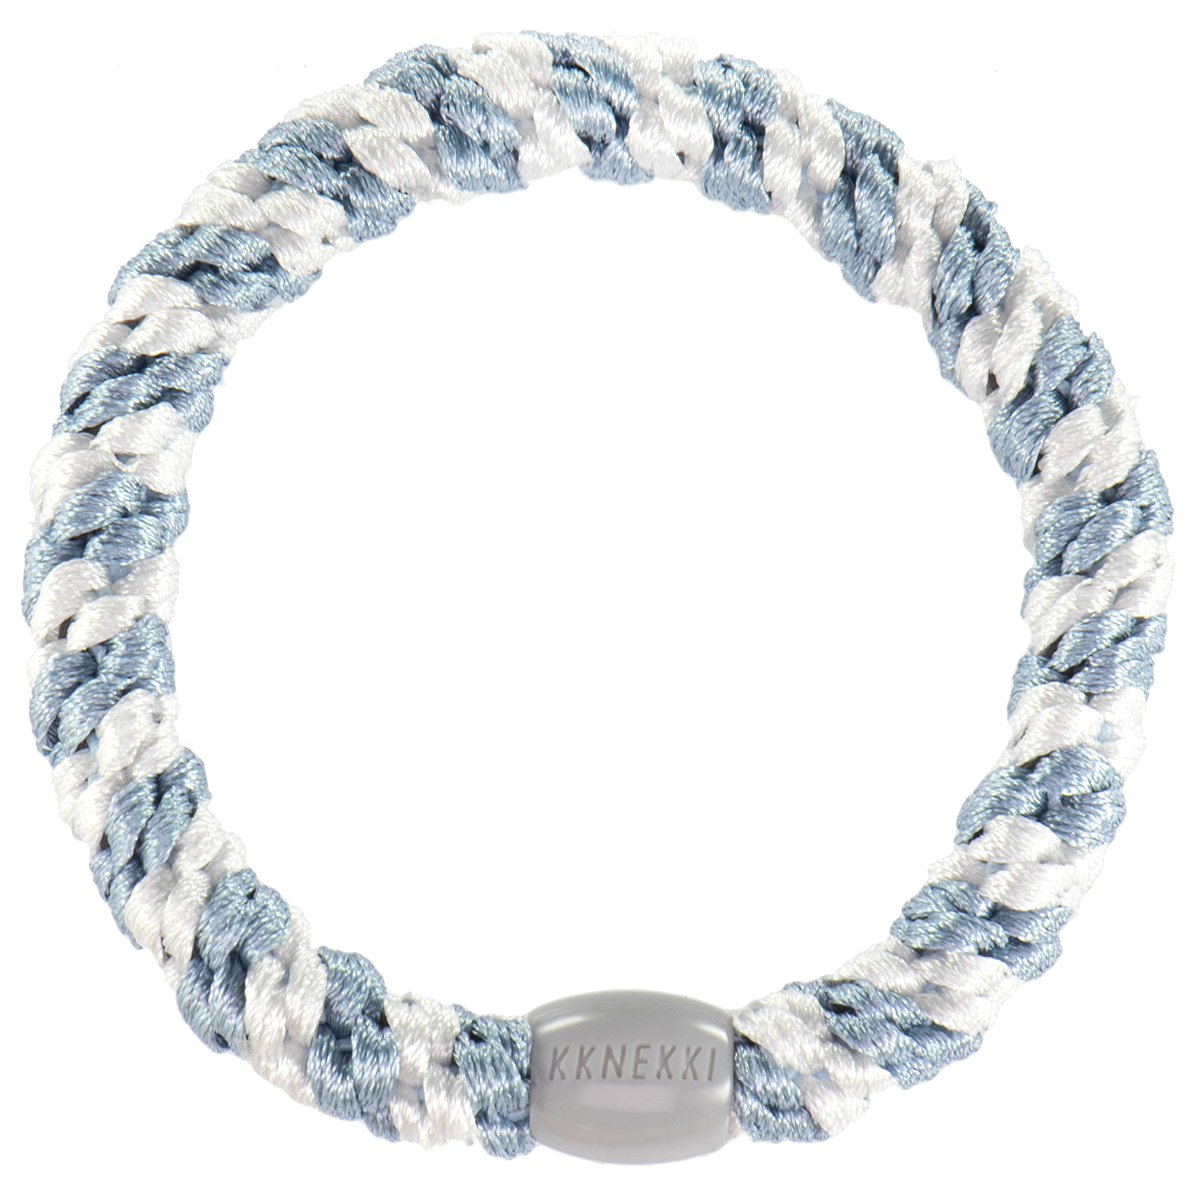 Image of Kknekki Sea blue-white  from Kknekki original hair ties